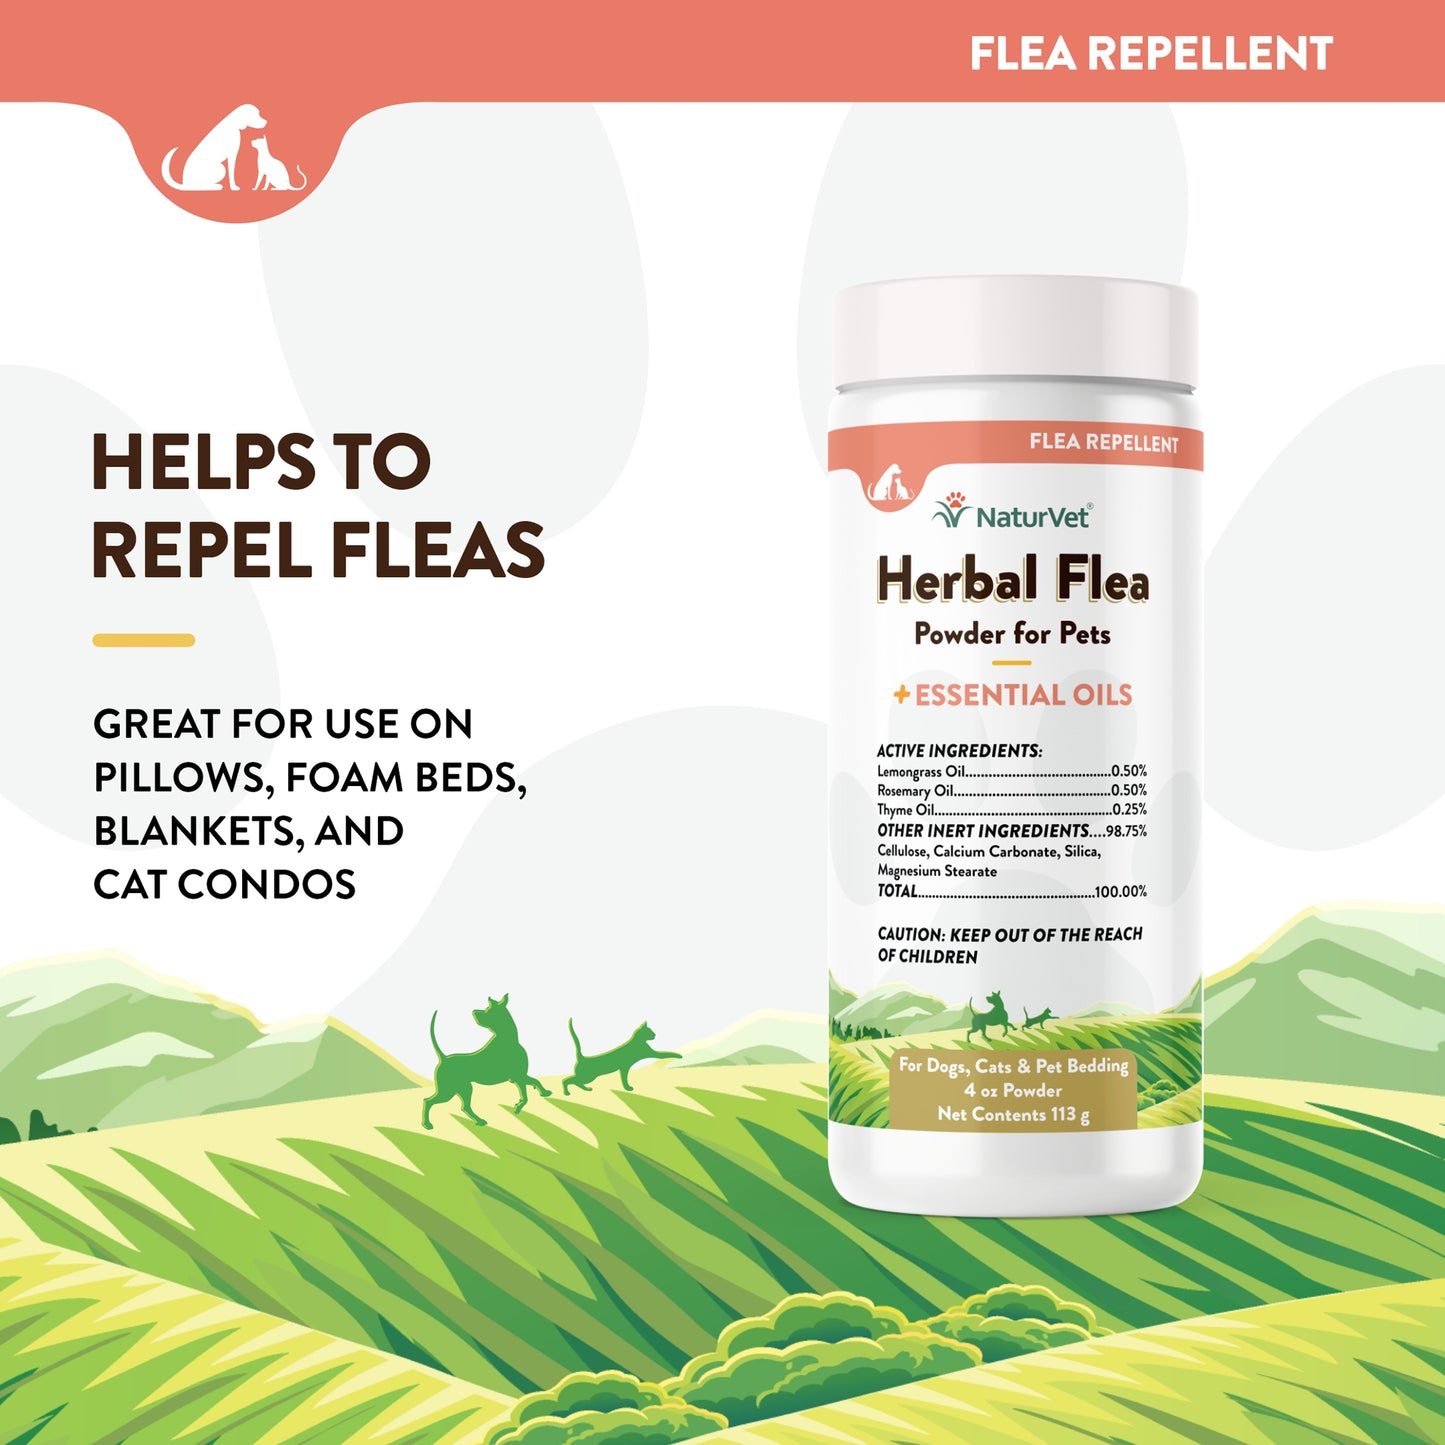 Herbal Flea Powder